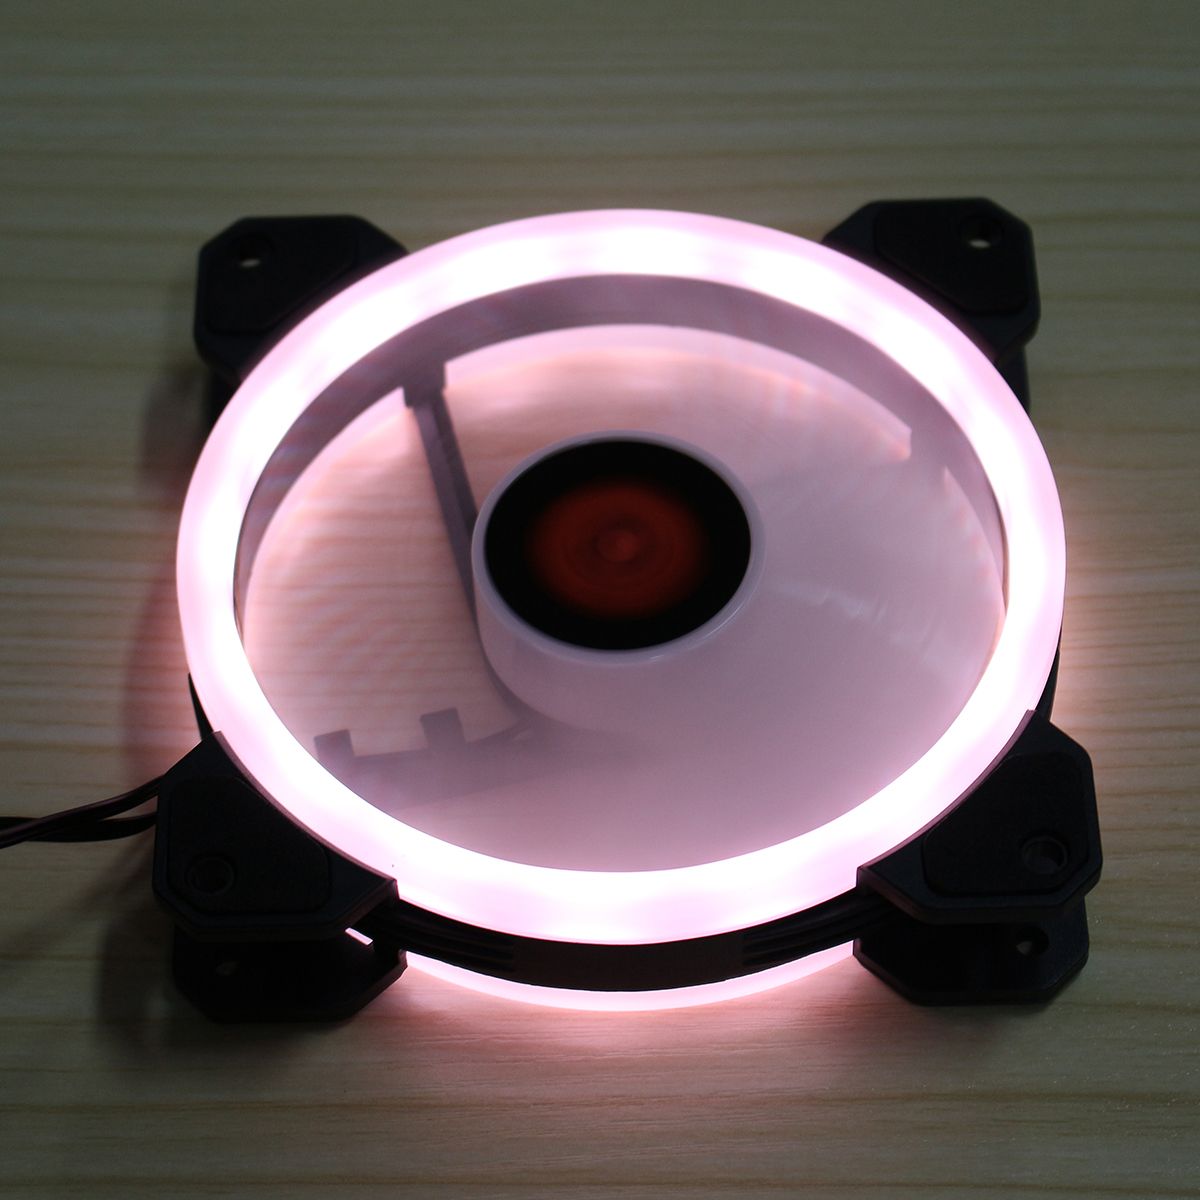 Coolmoon-1PCS-120mm-Adjustable-RGB-LED-Light-Computer-PC-Case-Cooling-Fan-1269357